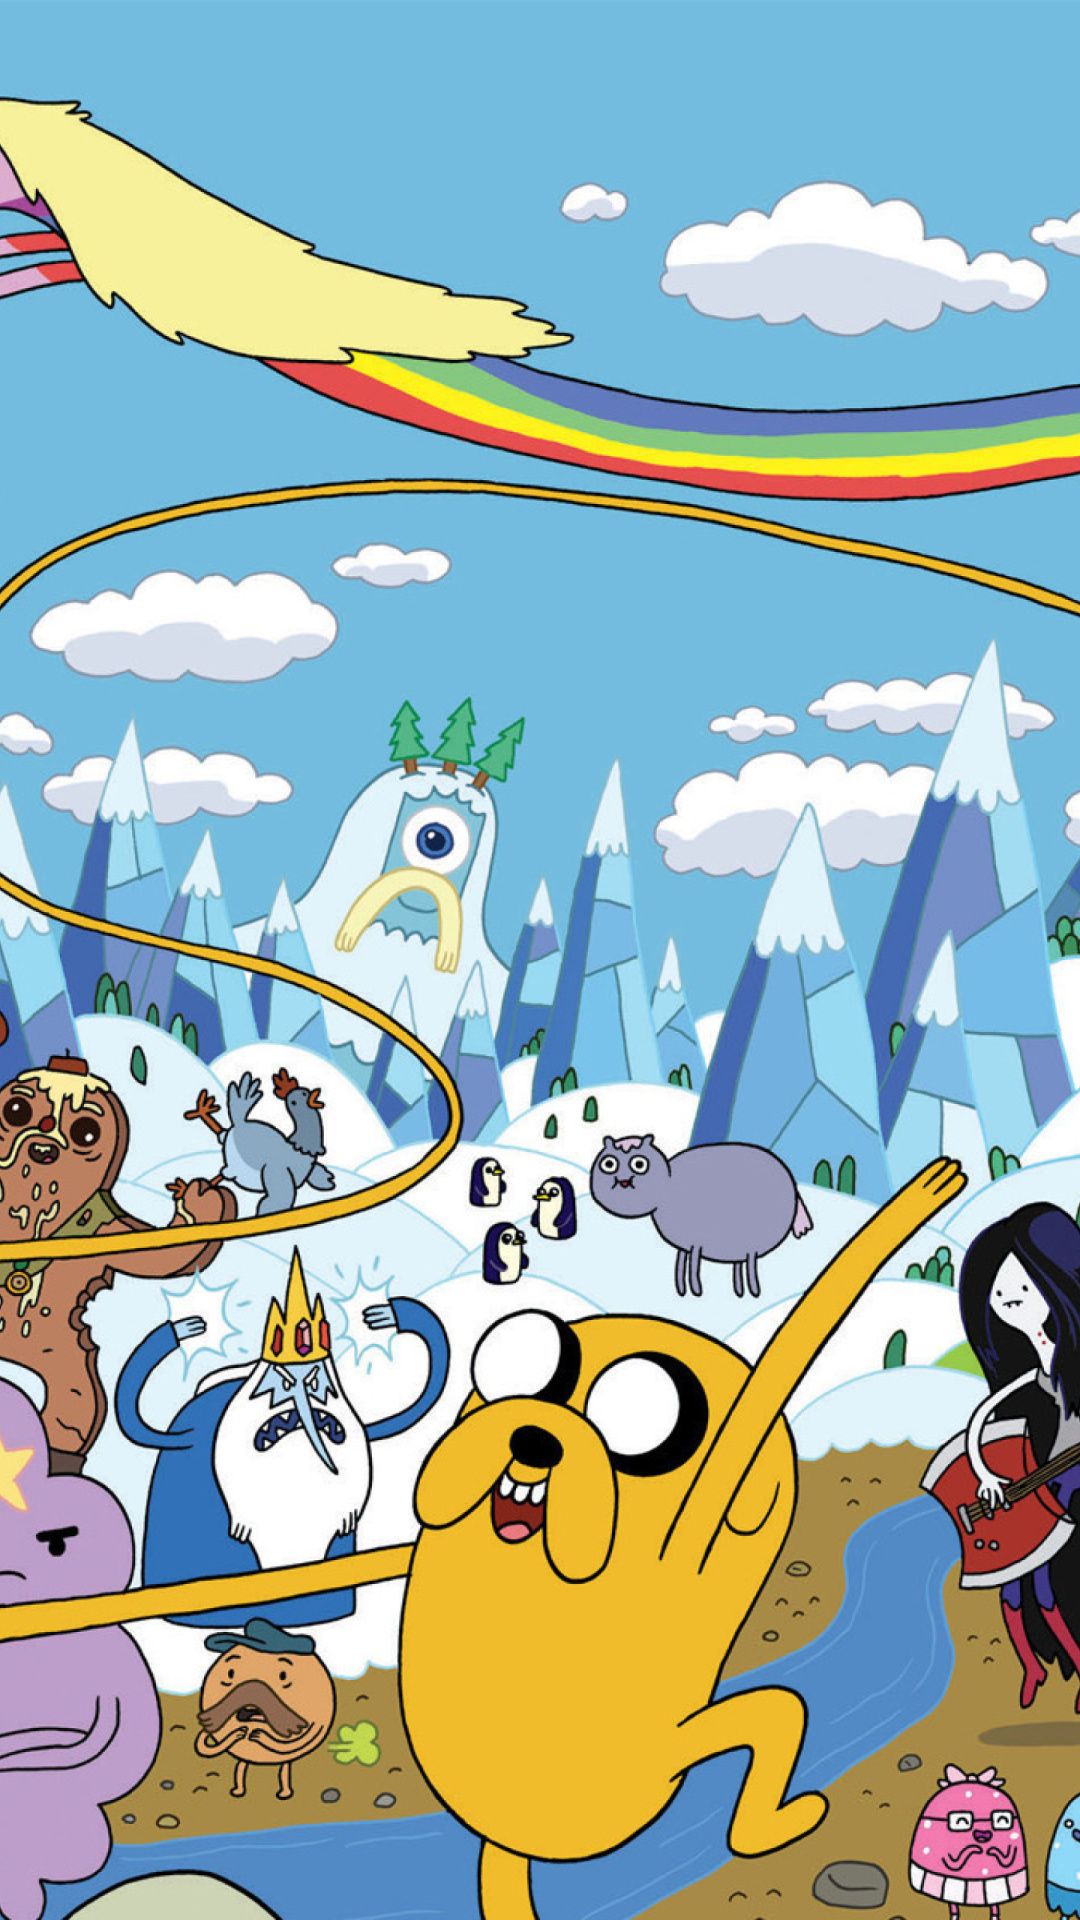 Adventure Time 1 